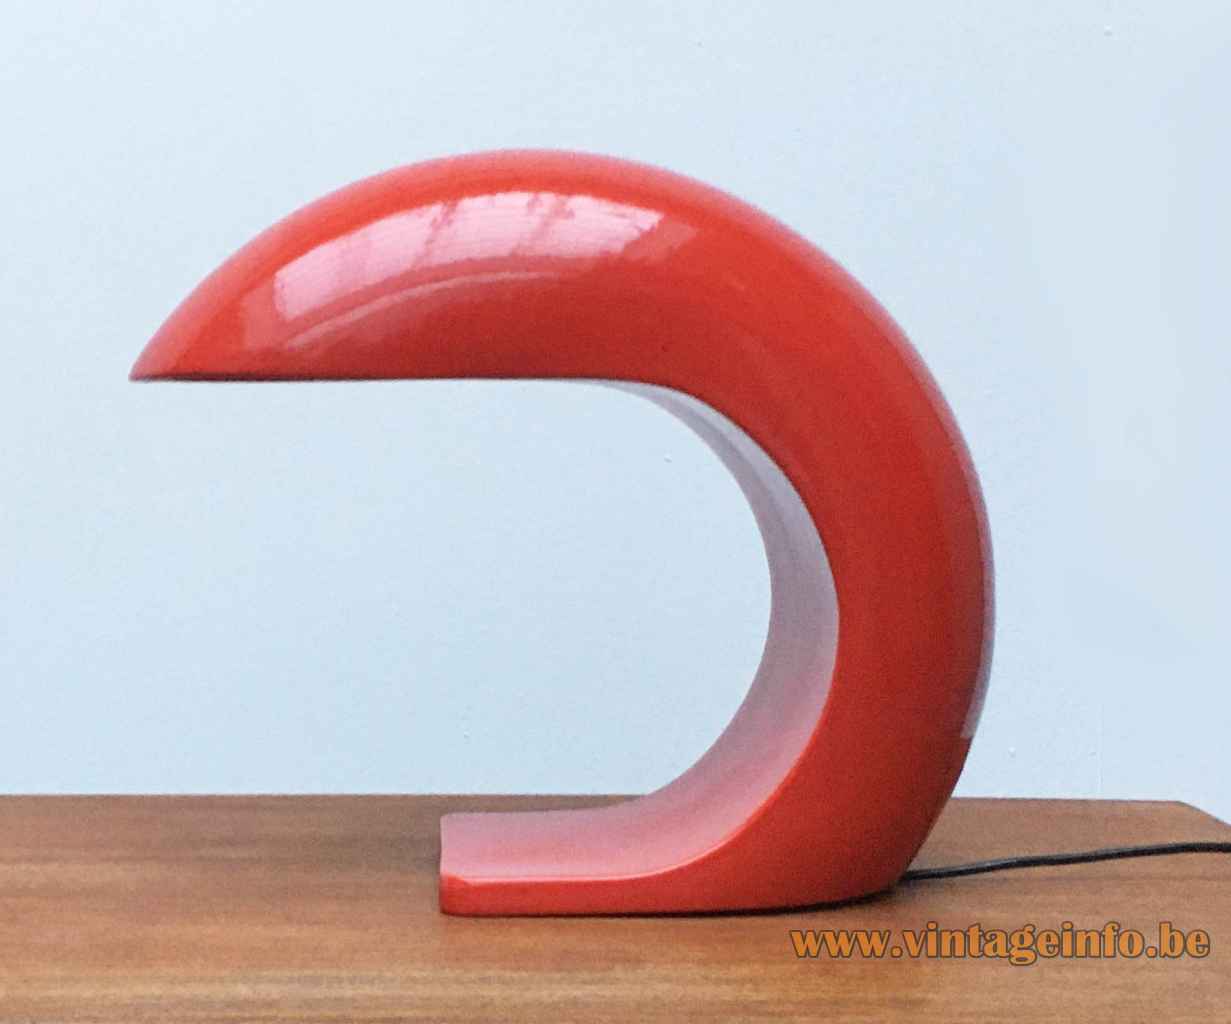 Prisma ceramic table lamp red-orange glazed curved arc lampshade 1970s Italy E27 socket